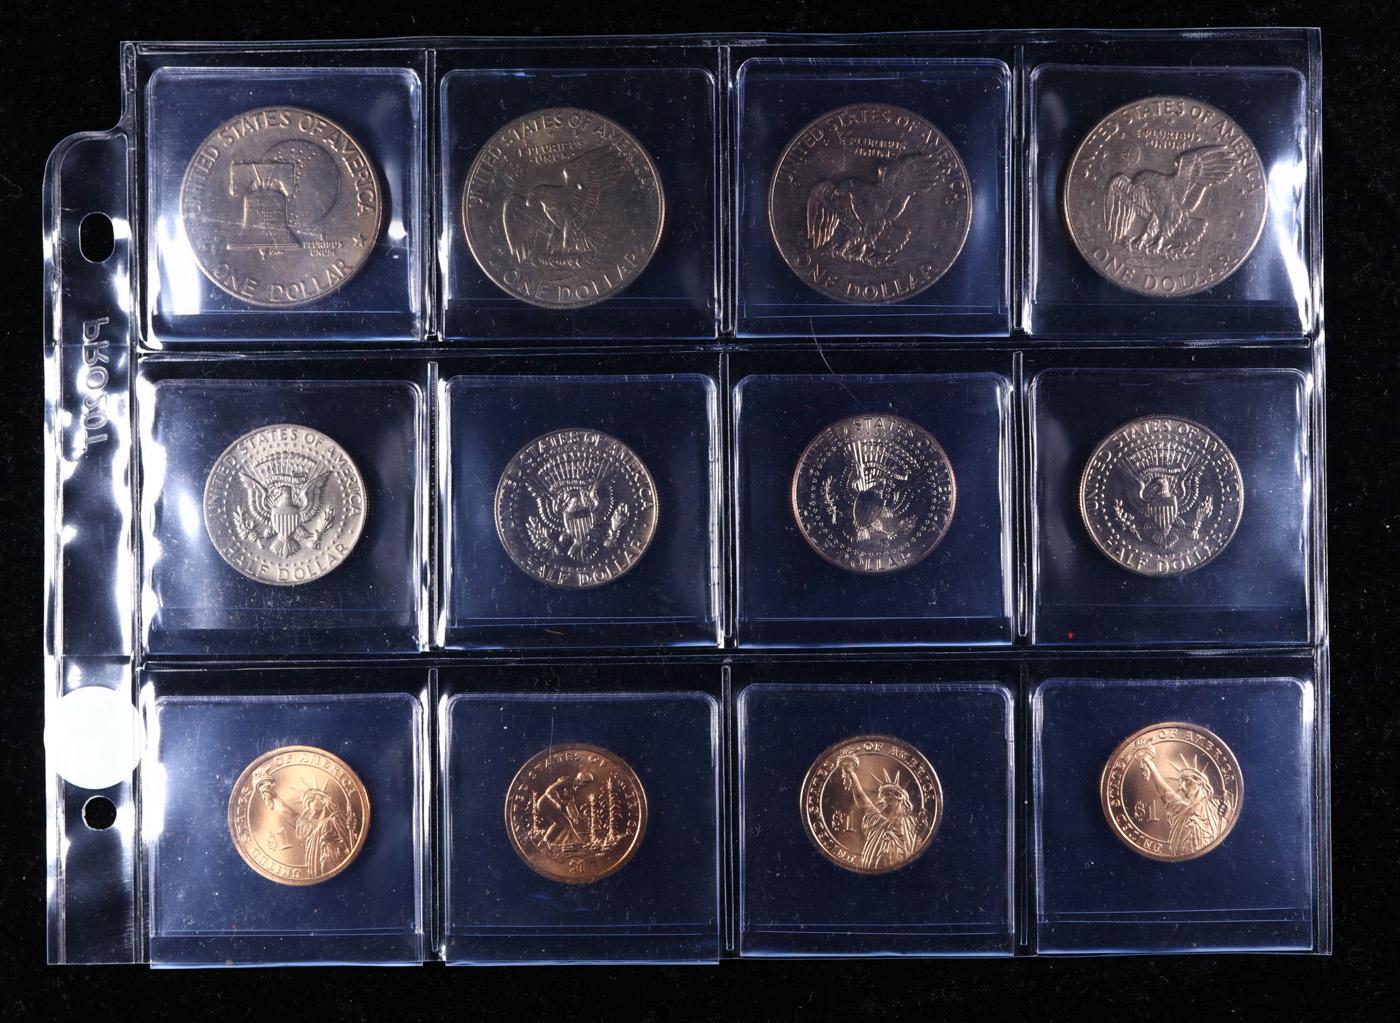 Superb Page of 12 US Coins 4x Kennedy Half Dollars, 4x Dollar Coins $1, & 4x Eisenhower $1's